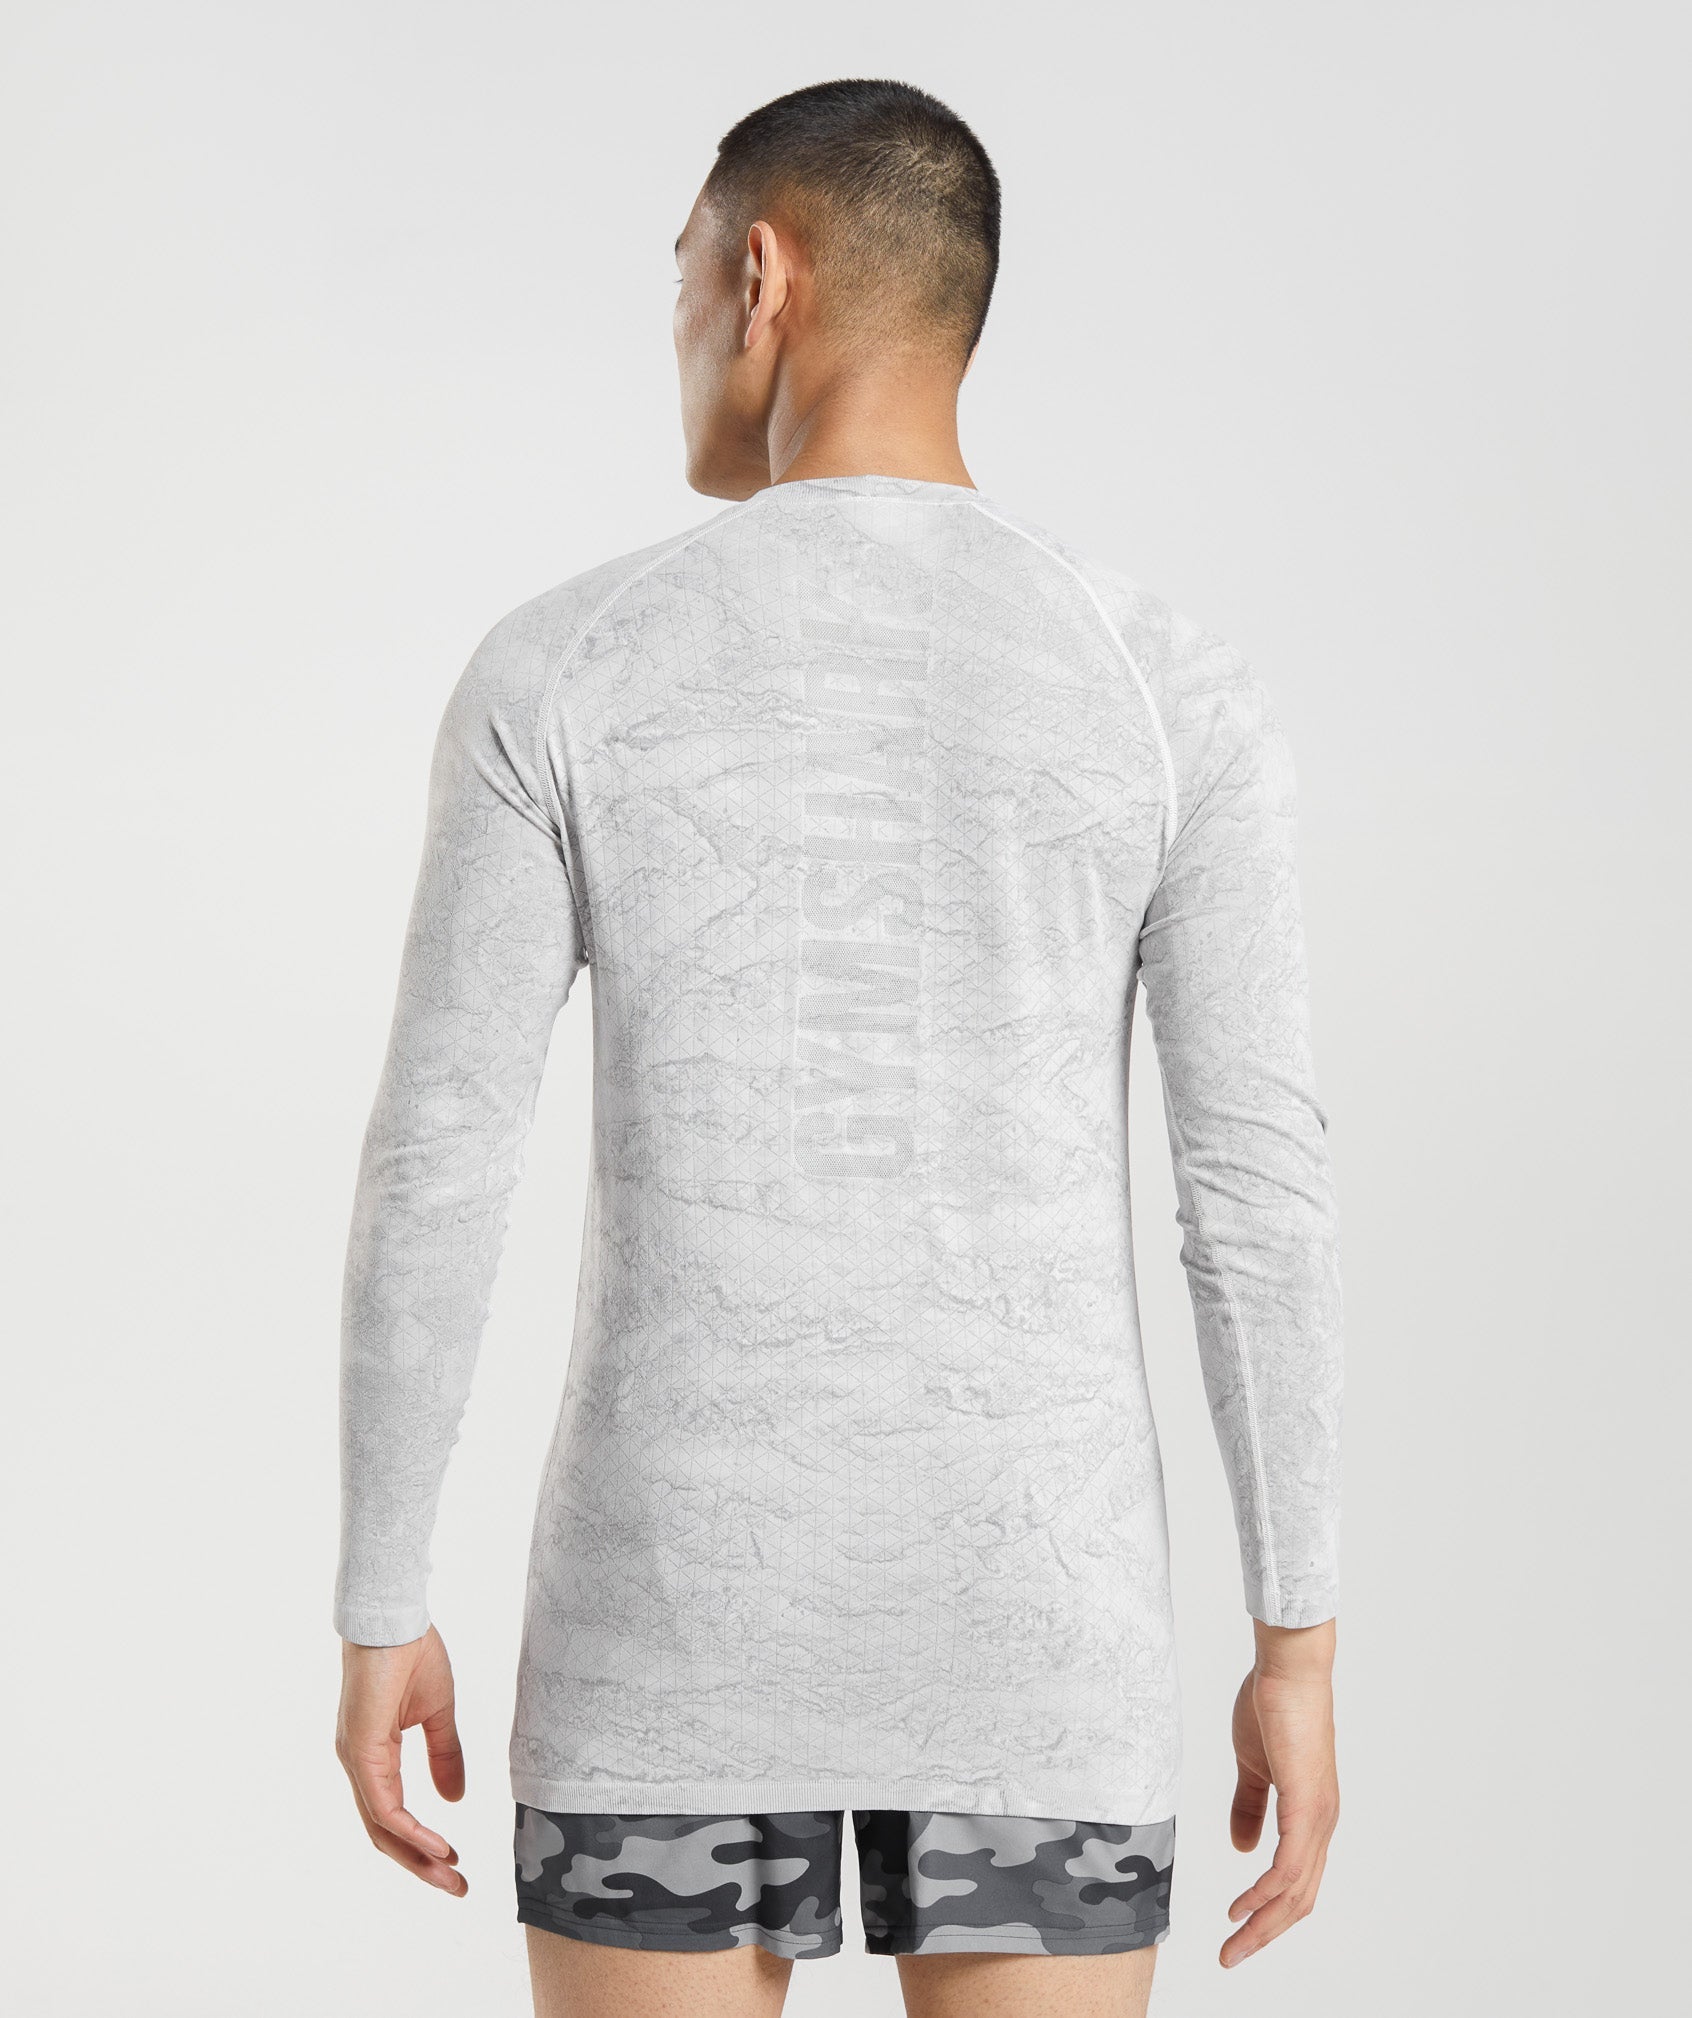 Geo Seamless Long Sleeve T-Shirt in Off White/Light Grey